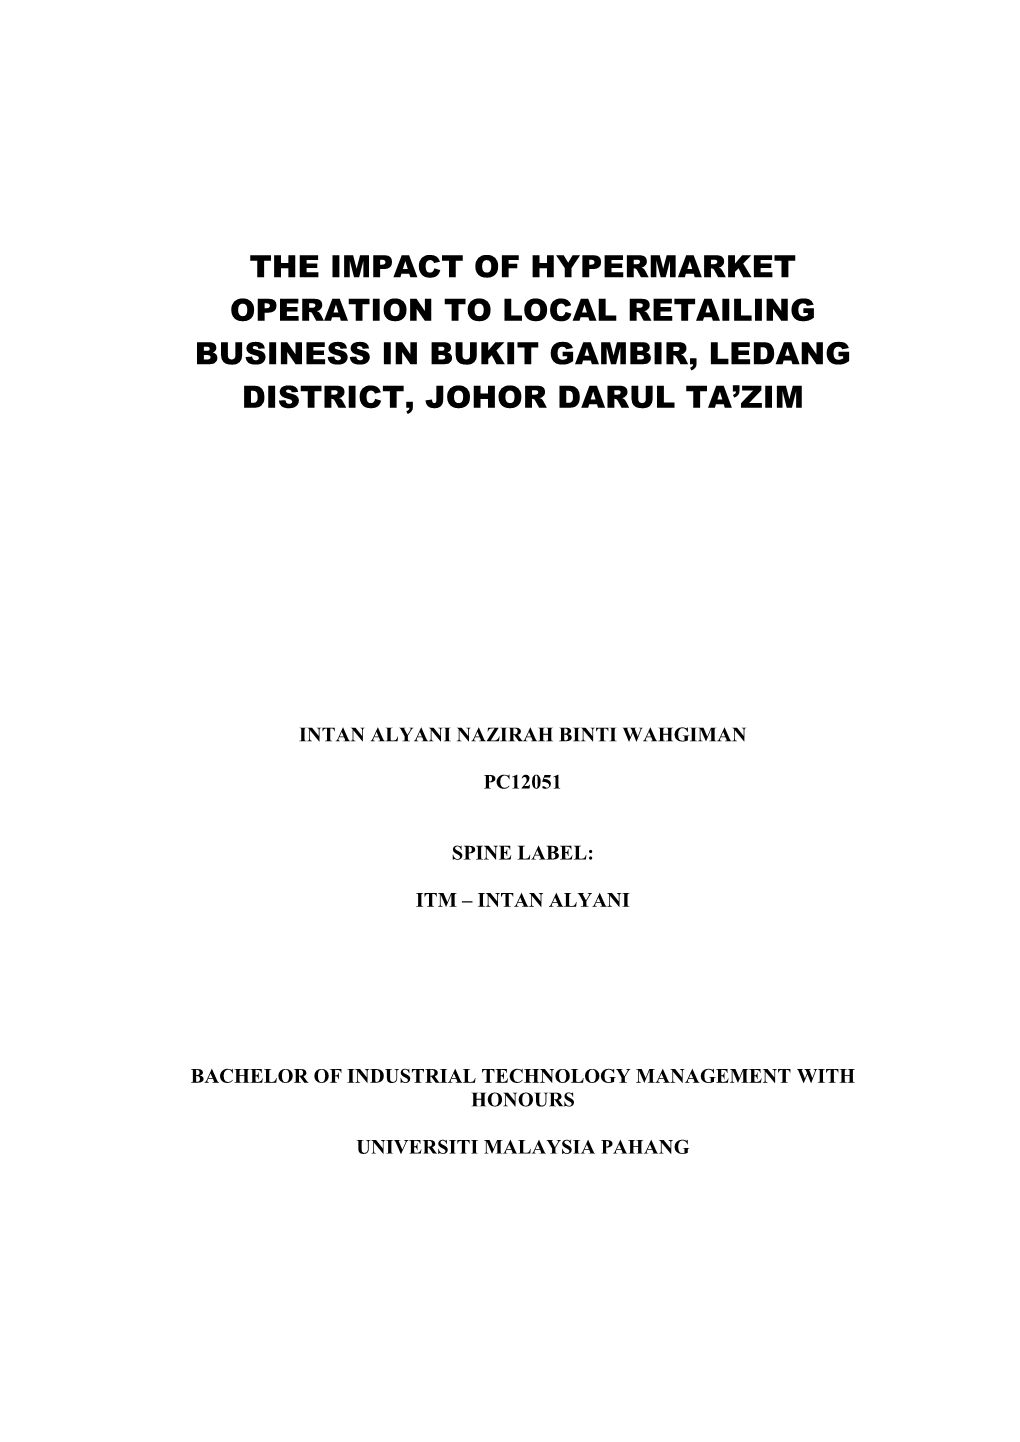 The Impact of Hypermarket Operation to Local Retailing Business in Bukit Gambir, Ledang District, Johor Darul Ta’Zim